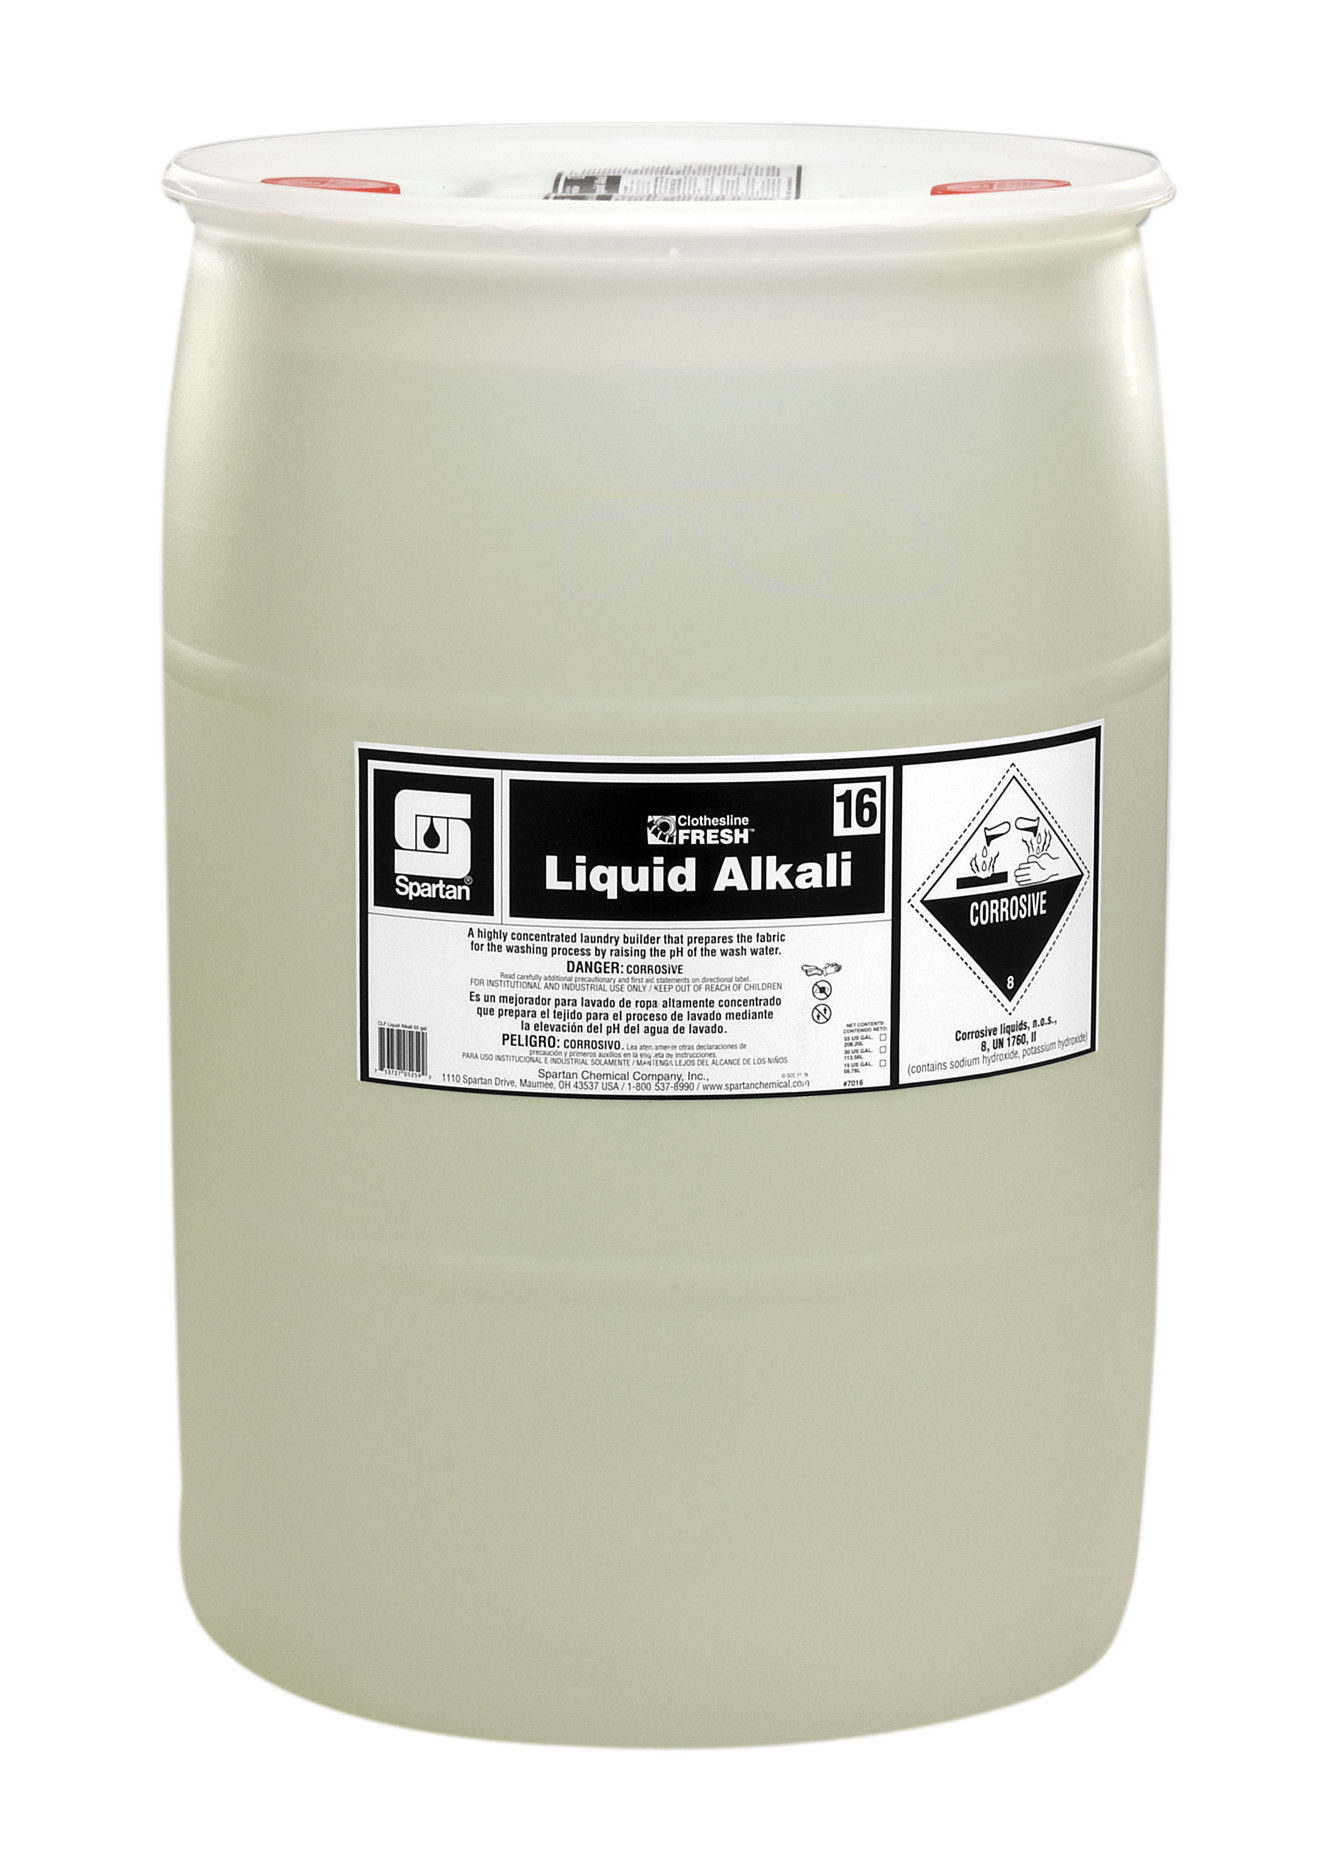 Spartan Chemical Company Clothesline Fresh Liquid Alkali 16, 55 GAL DRUM